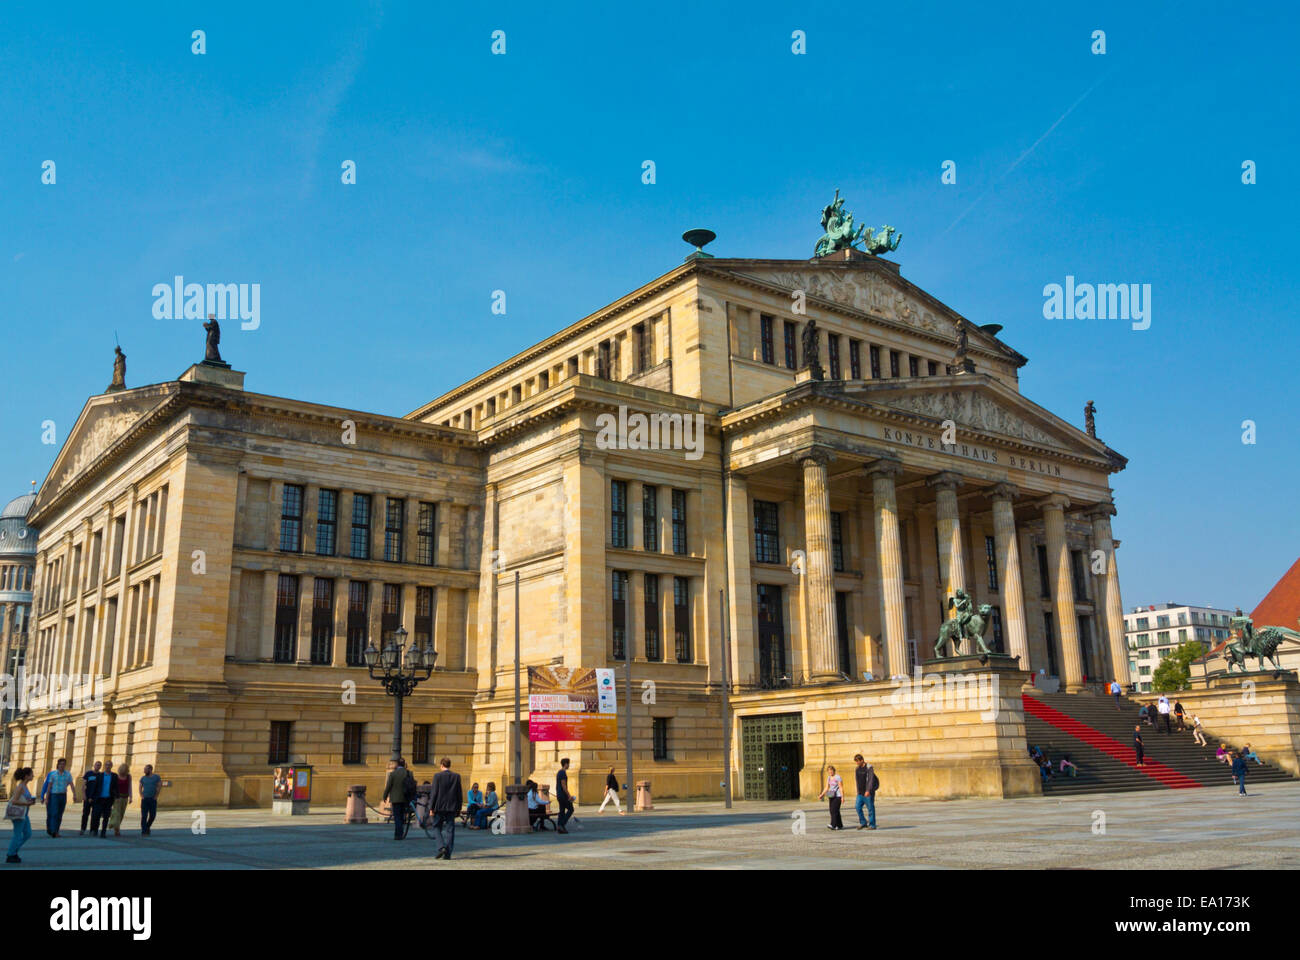 Konzerthaus, concert hall, Gendarmenmarkt square, Mitte district, central Berlin, Germany Stock Photo